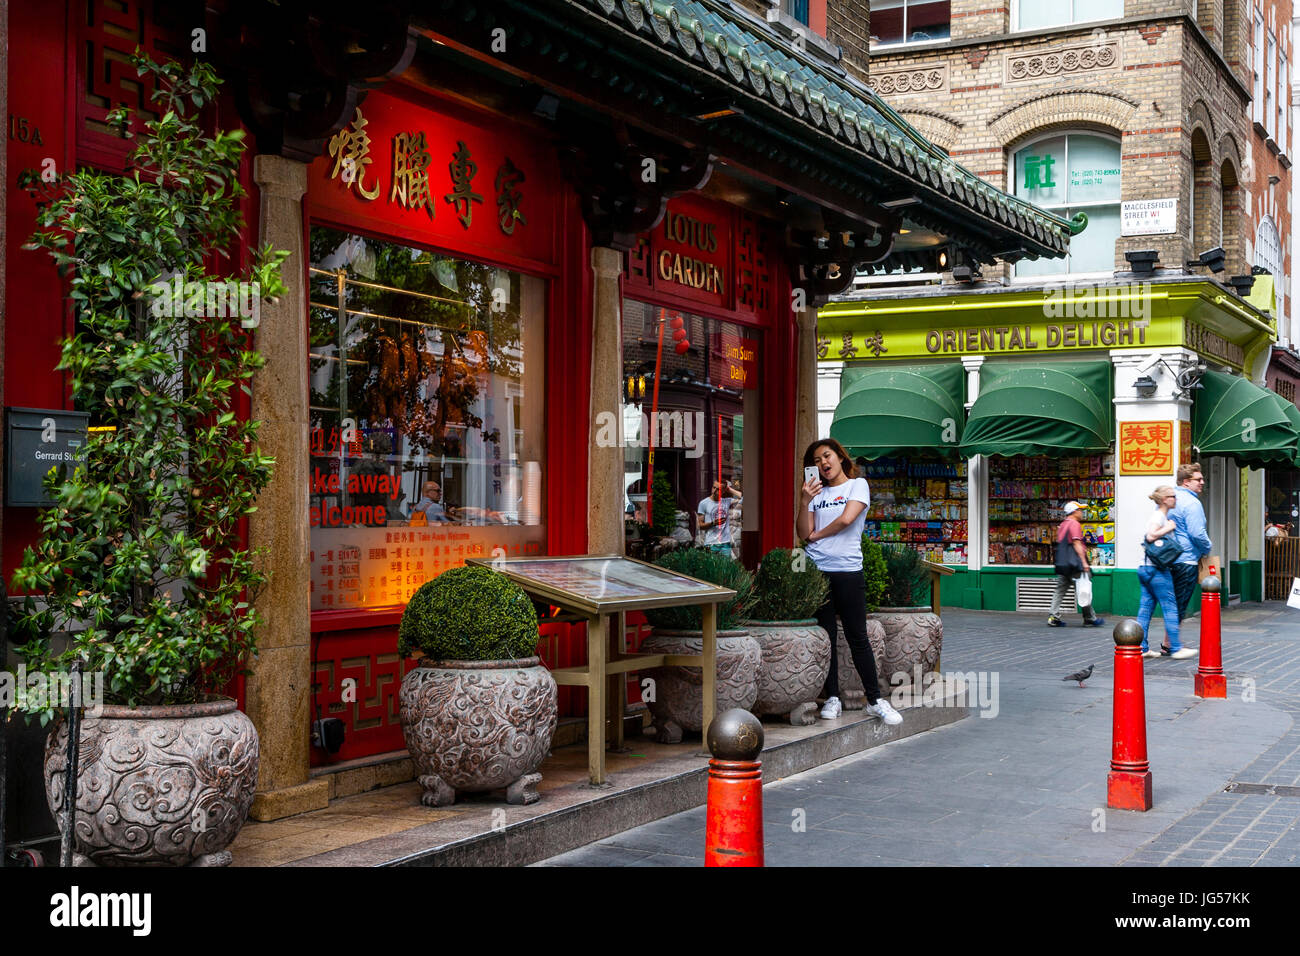 A Chinese Restaurant and Supermarket, Gerrard Street, Chinatown, London, UK Stock Photo